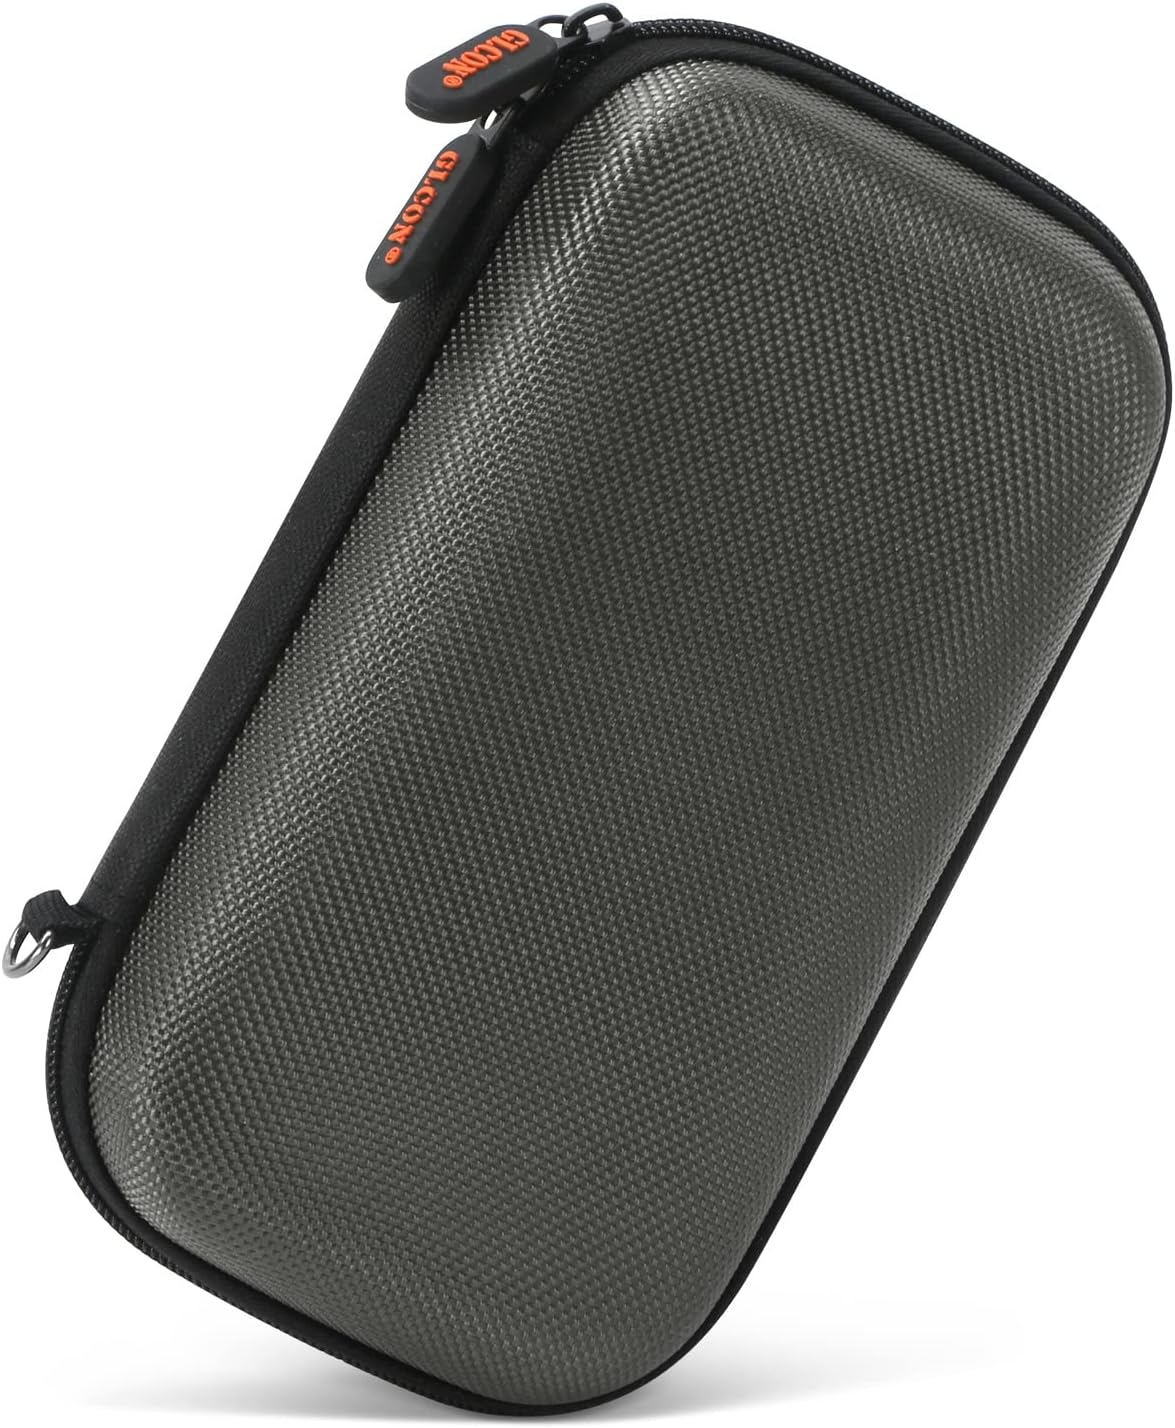 GLCON Dustproof Carrying Case Electronic Accessories Cable Organizer – Portable Small Travel Charger Case Power Bank Հեռախոսի քսակ – Կրկնակի կայծակաճարմանդ Դրամապանակ – Կոշտ EVA Storage Bag Car...